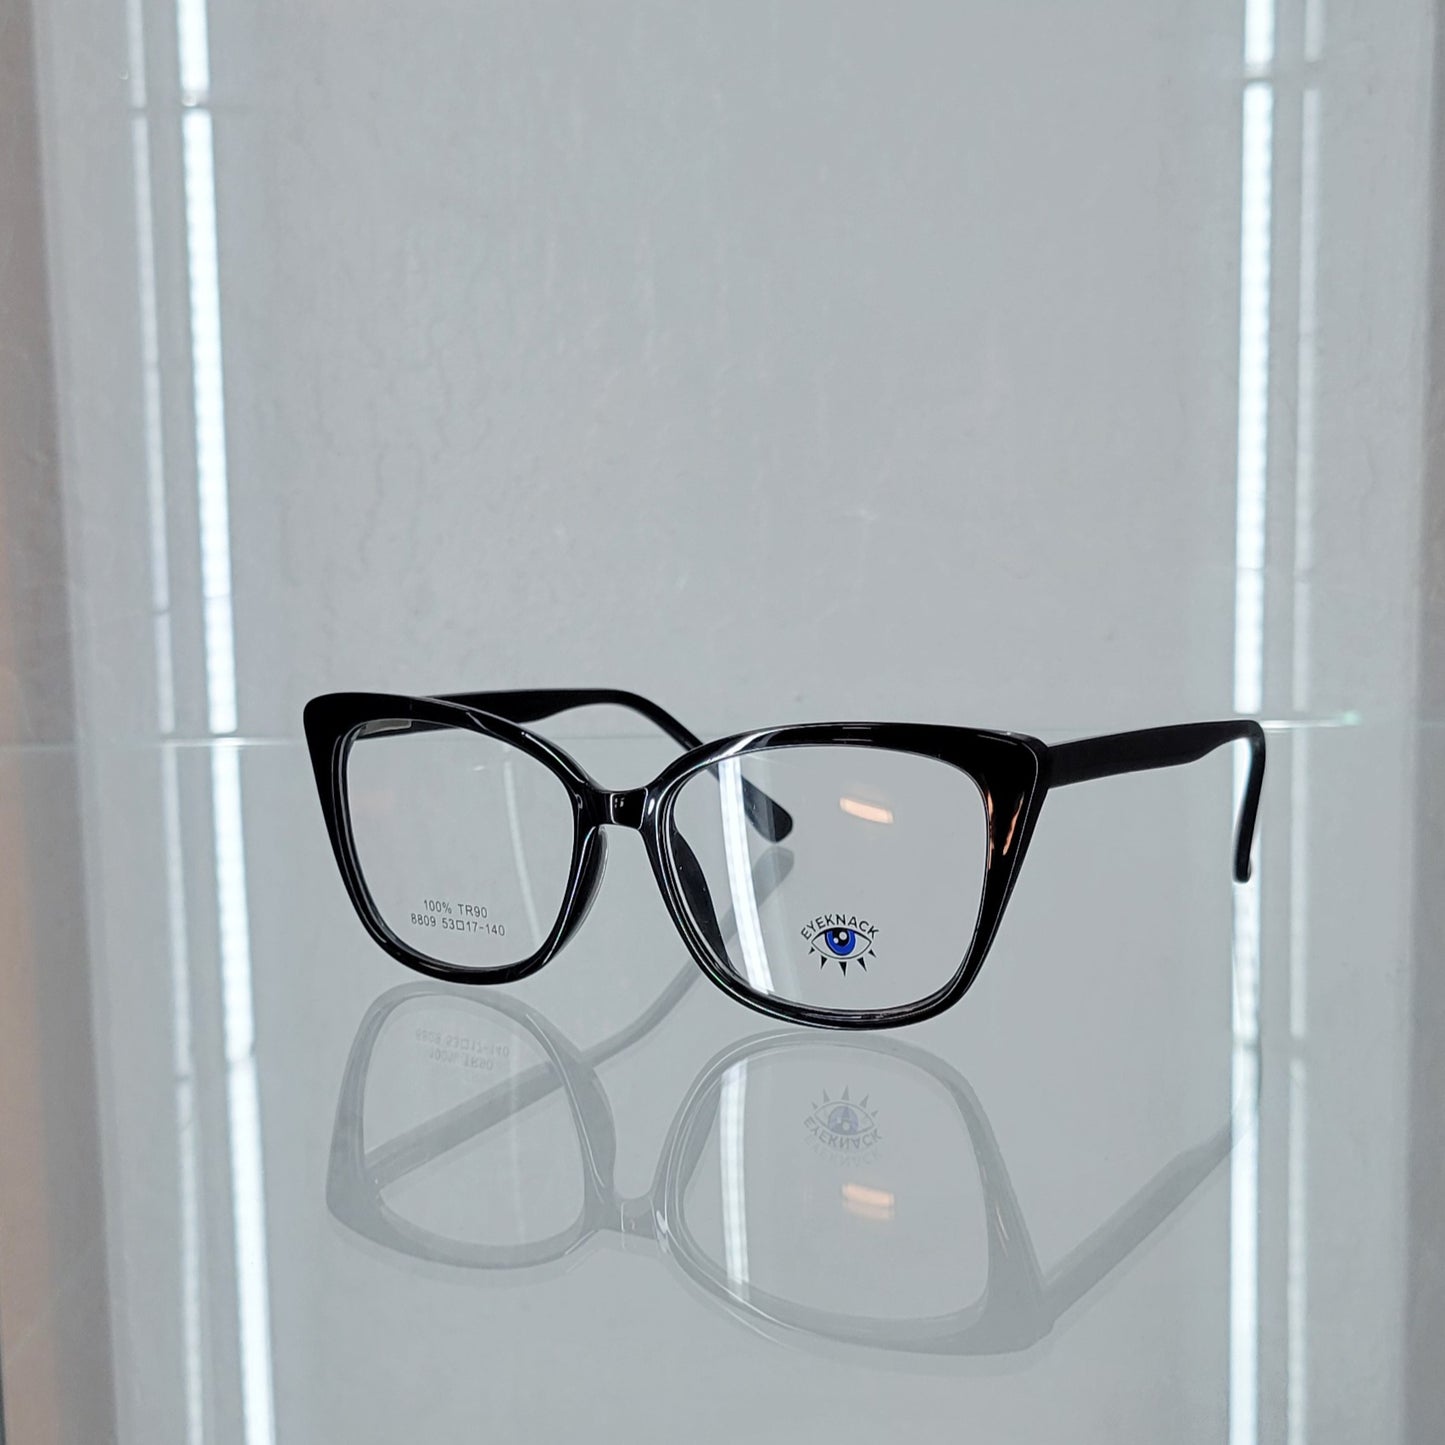 Atelier eyewear frames